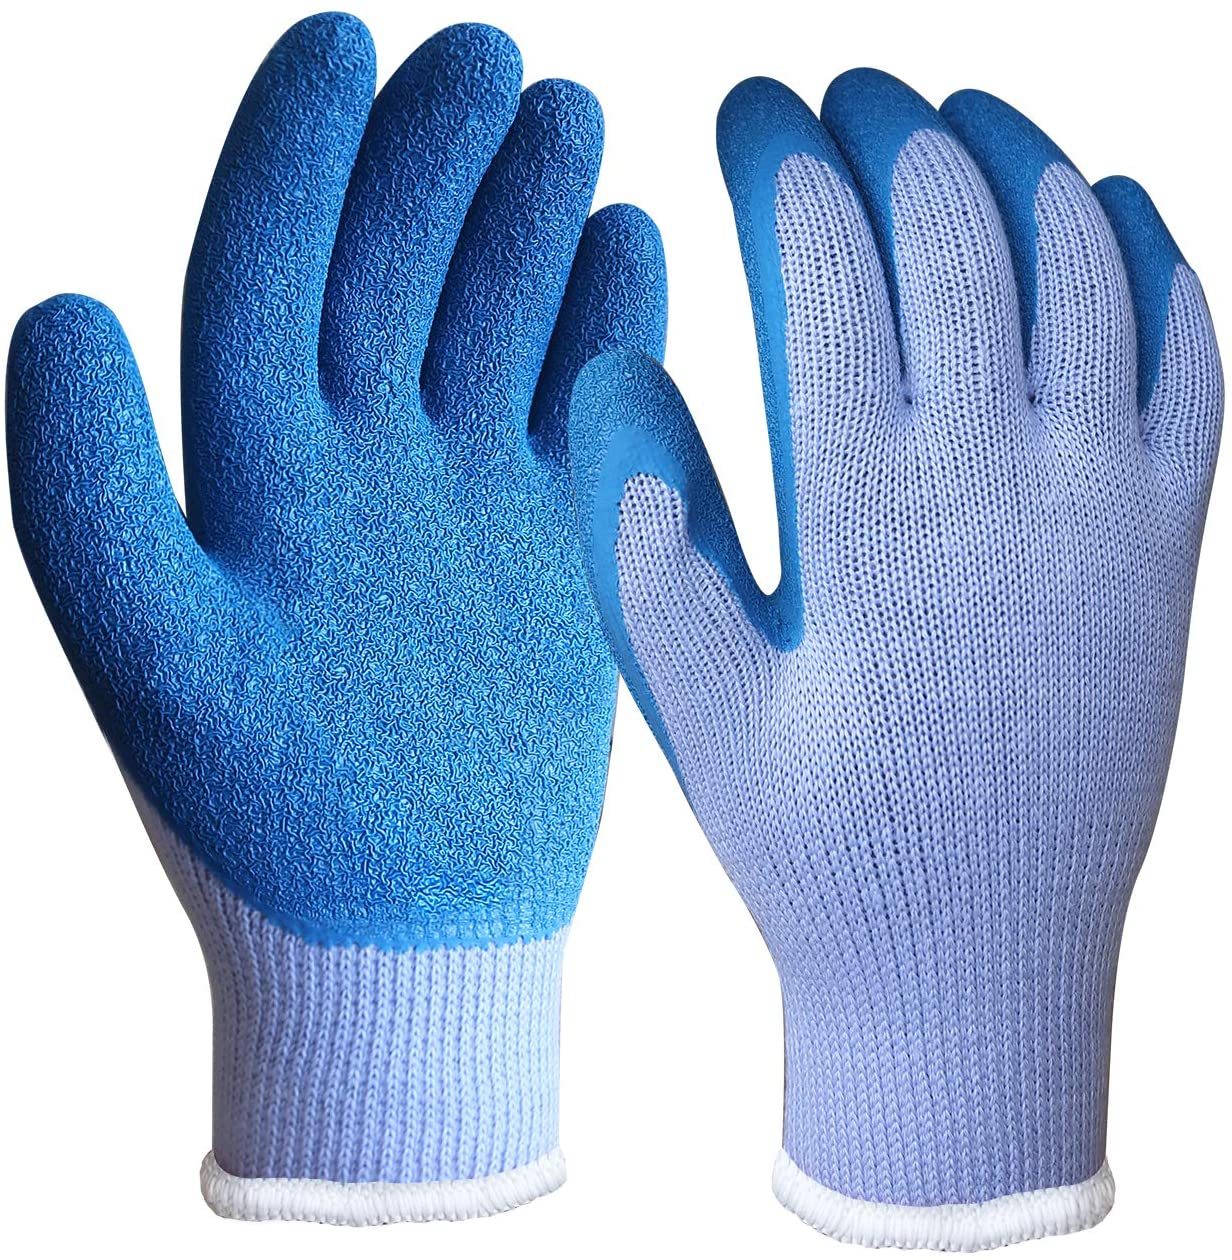 https://www.maincleaningsolution.com/wp-content/uploads/2020/08/Latex-Gloves-1.jpg